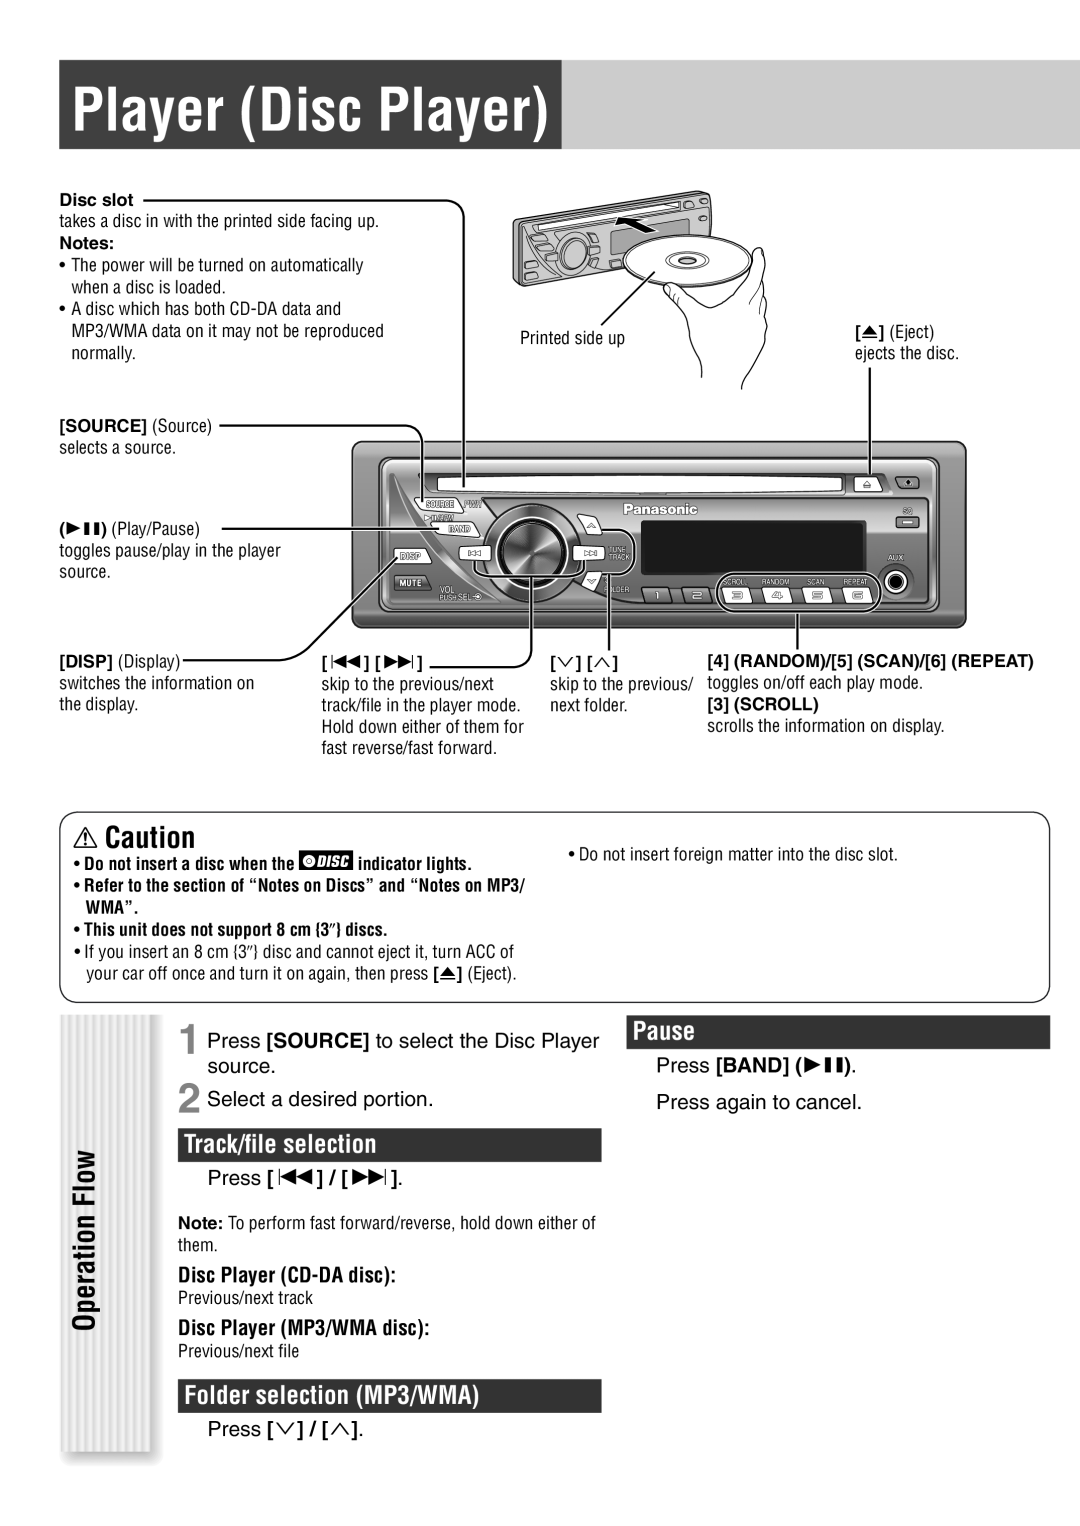 Panasonic CQ-C1335U Player Disc Player, Pause, Track/ﬁle selection, Folder selection MP3/WMA, Flow, Disc slot,  ,   